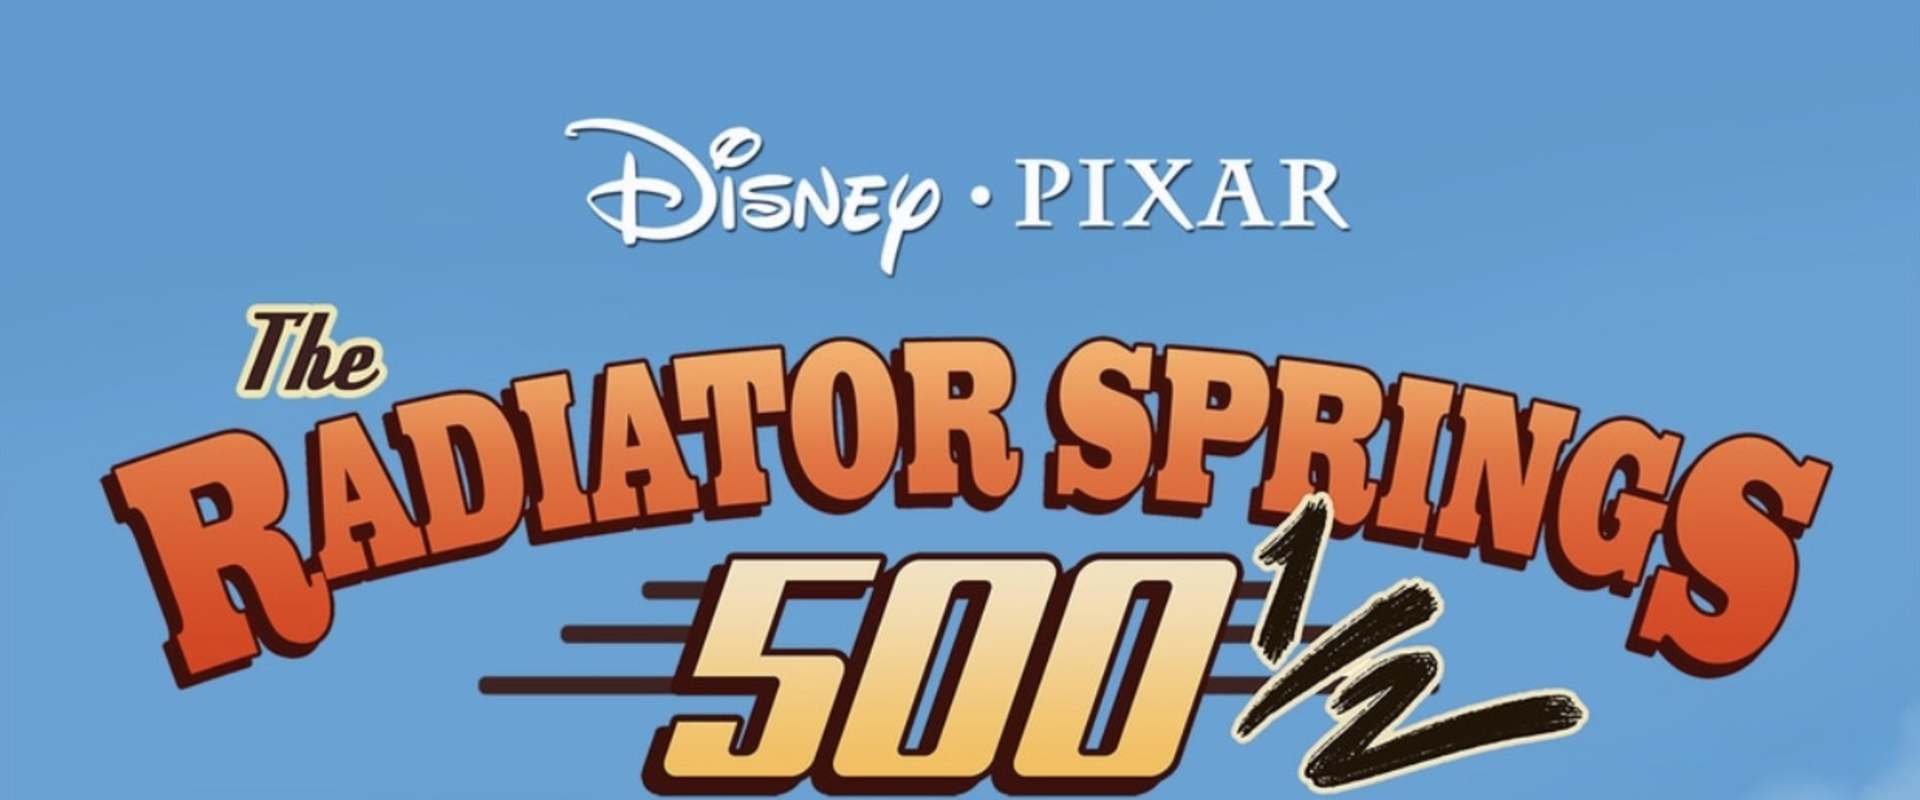 The Radiator Springs 500½ background 2